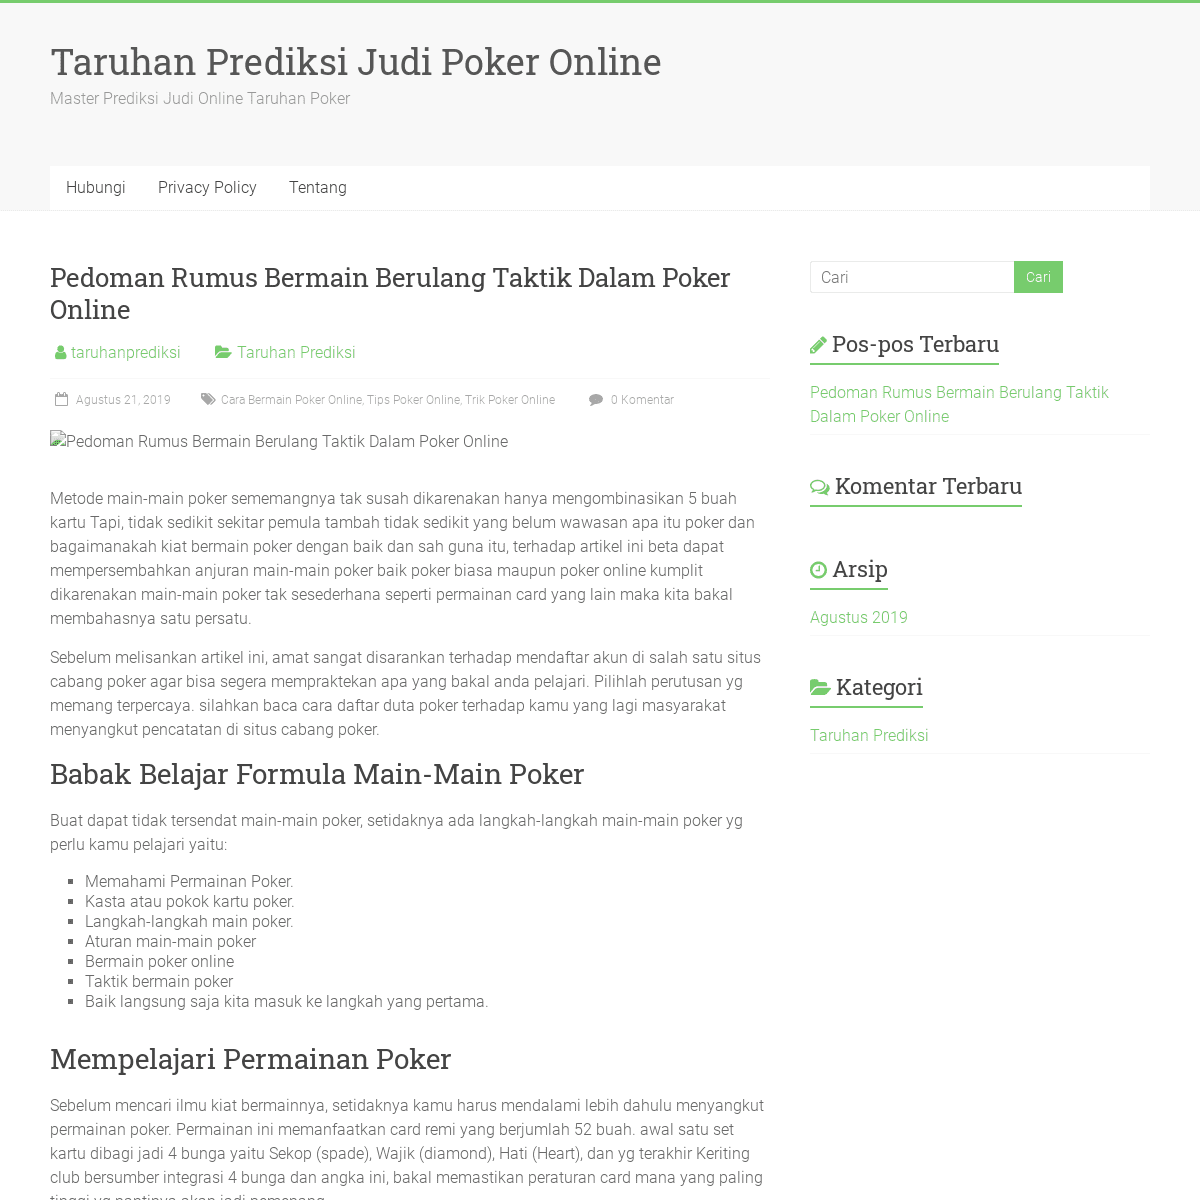 A complete backup of taruhanprediksi.com